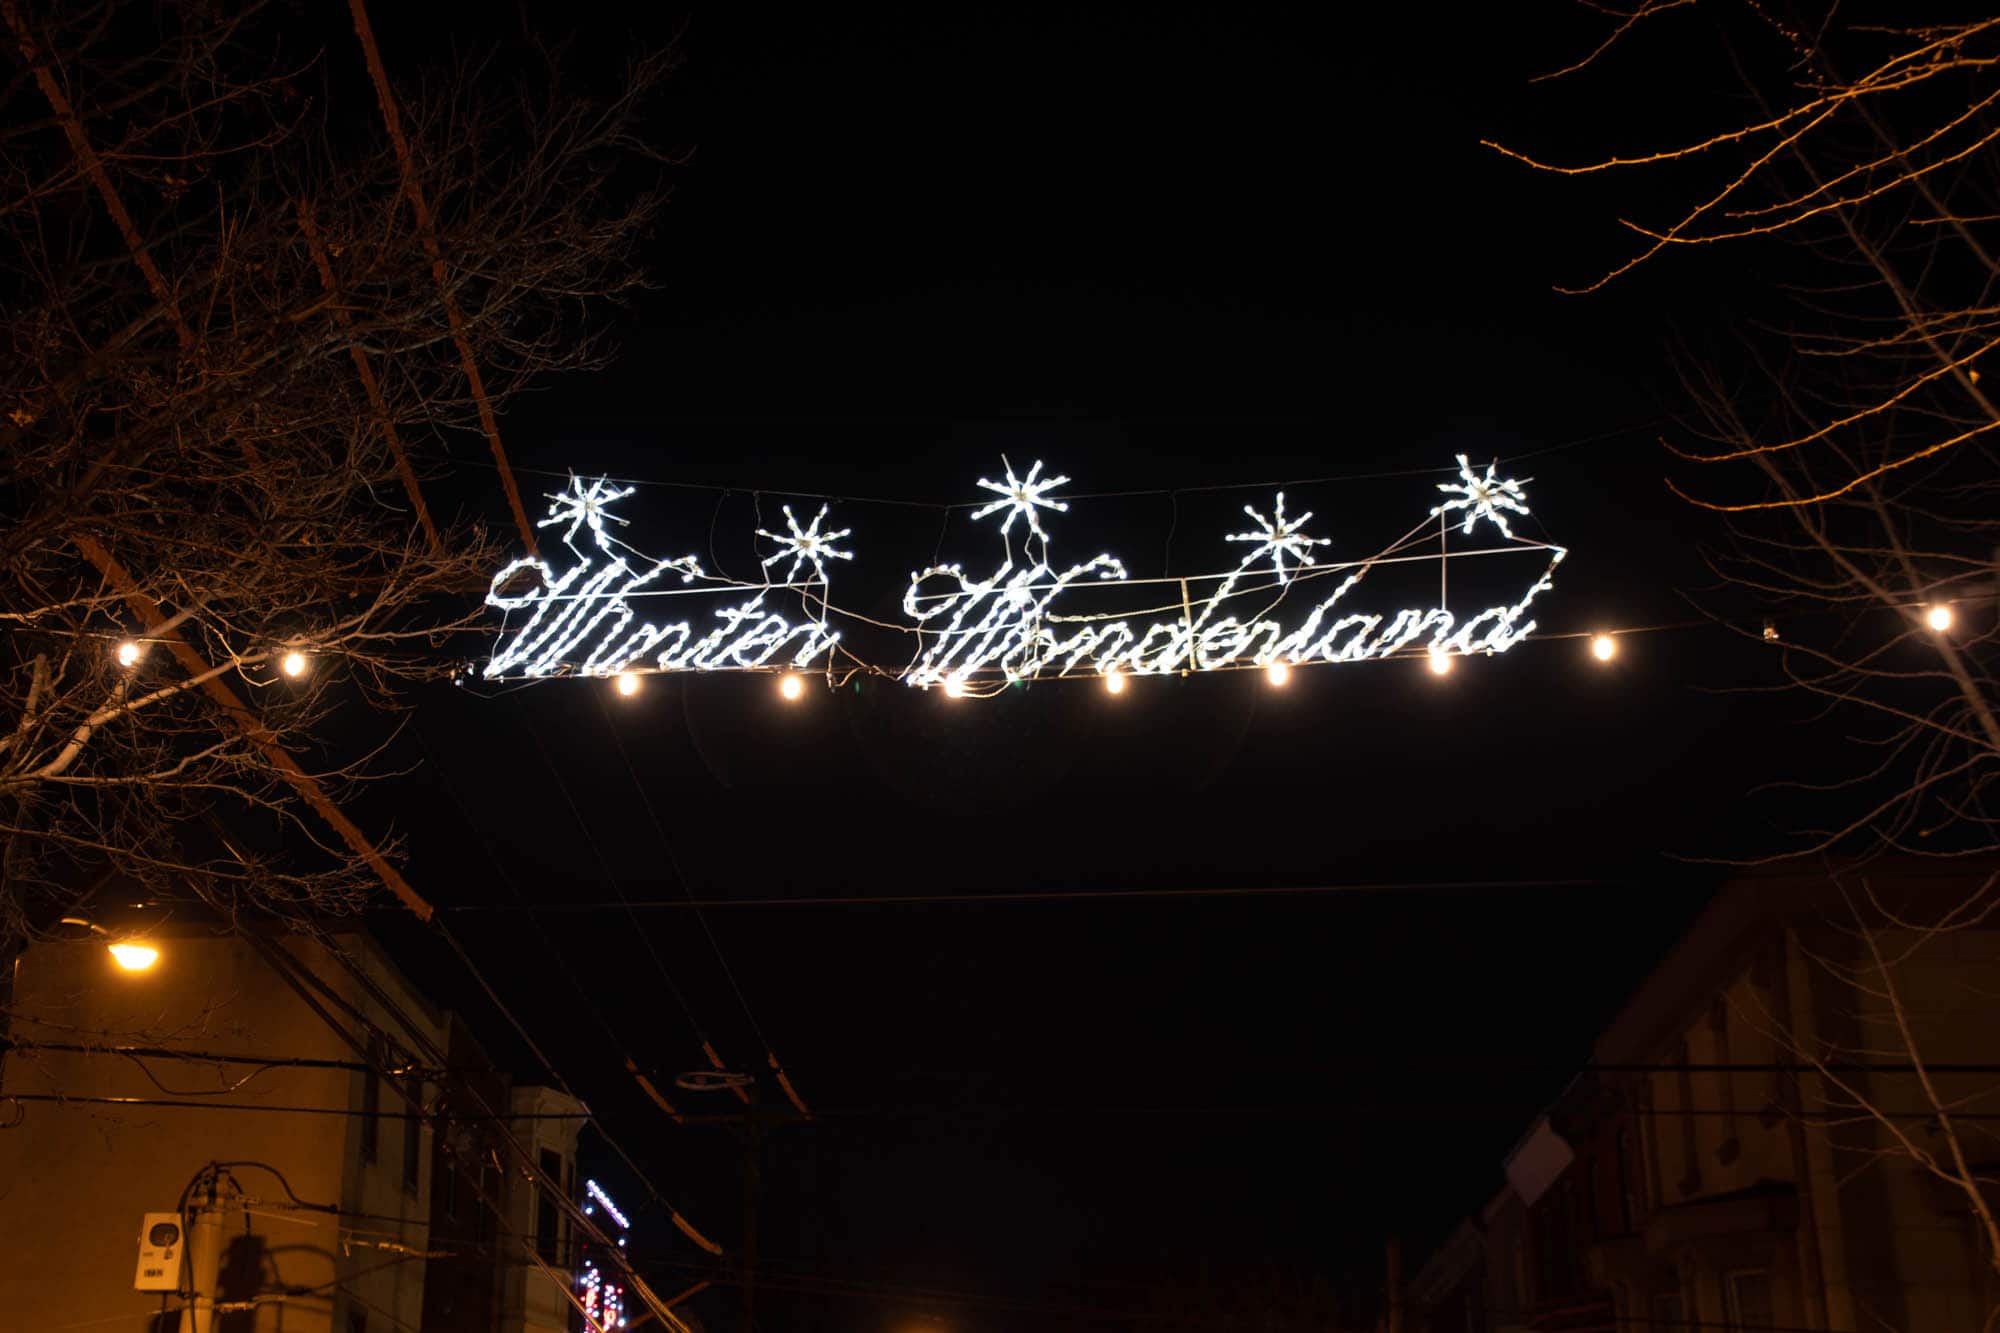 Illuminated sign over street reading 'Winter Wonderland'